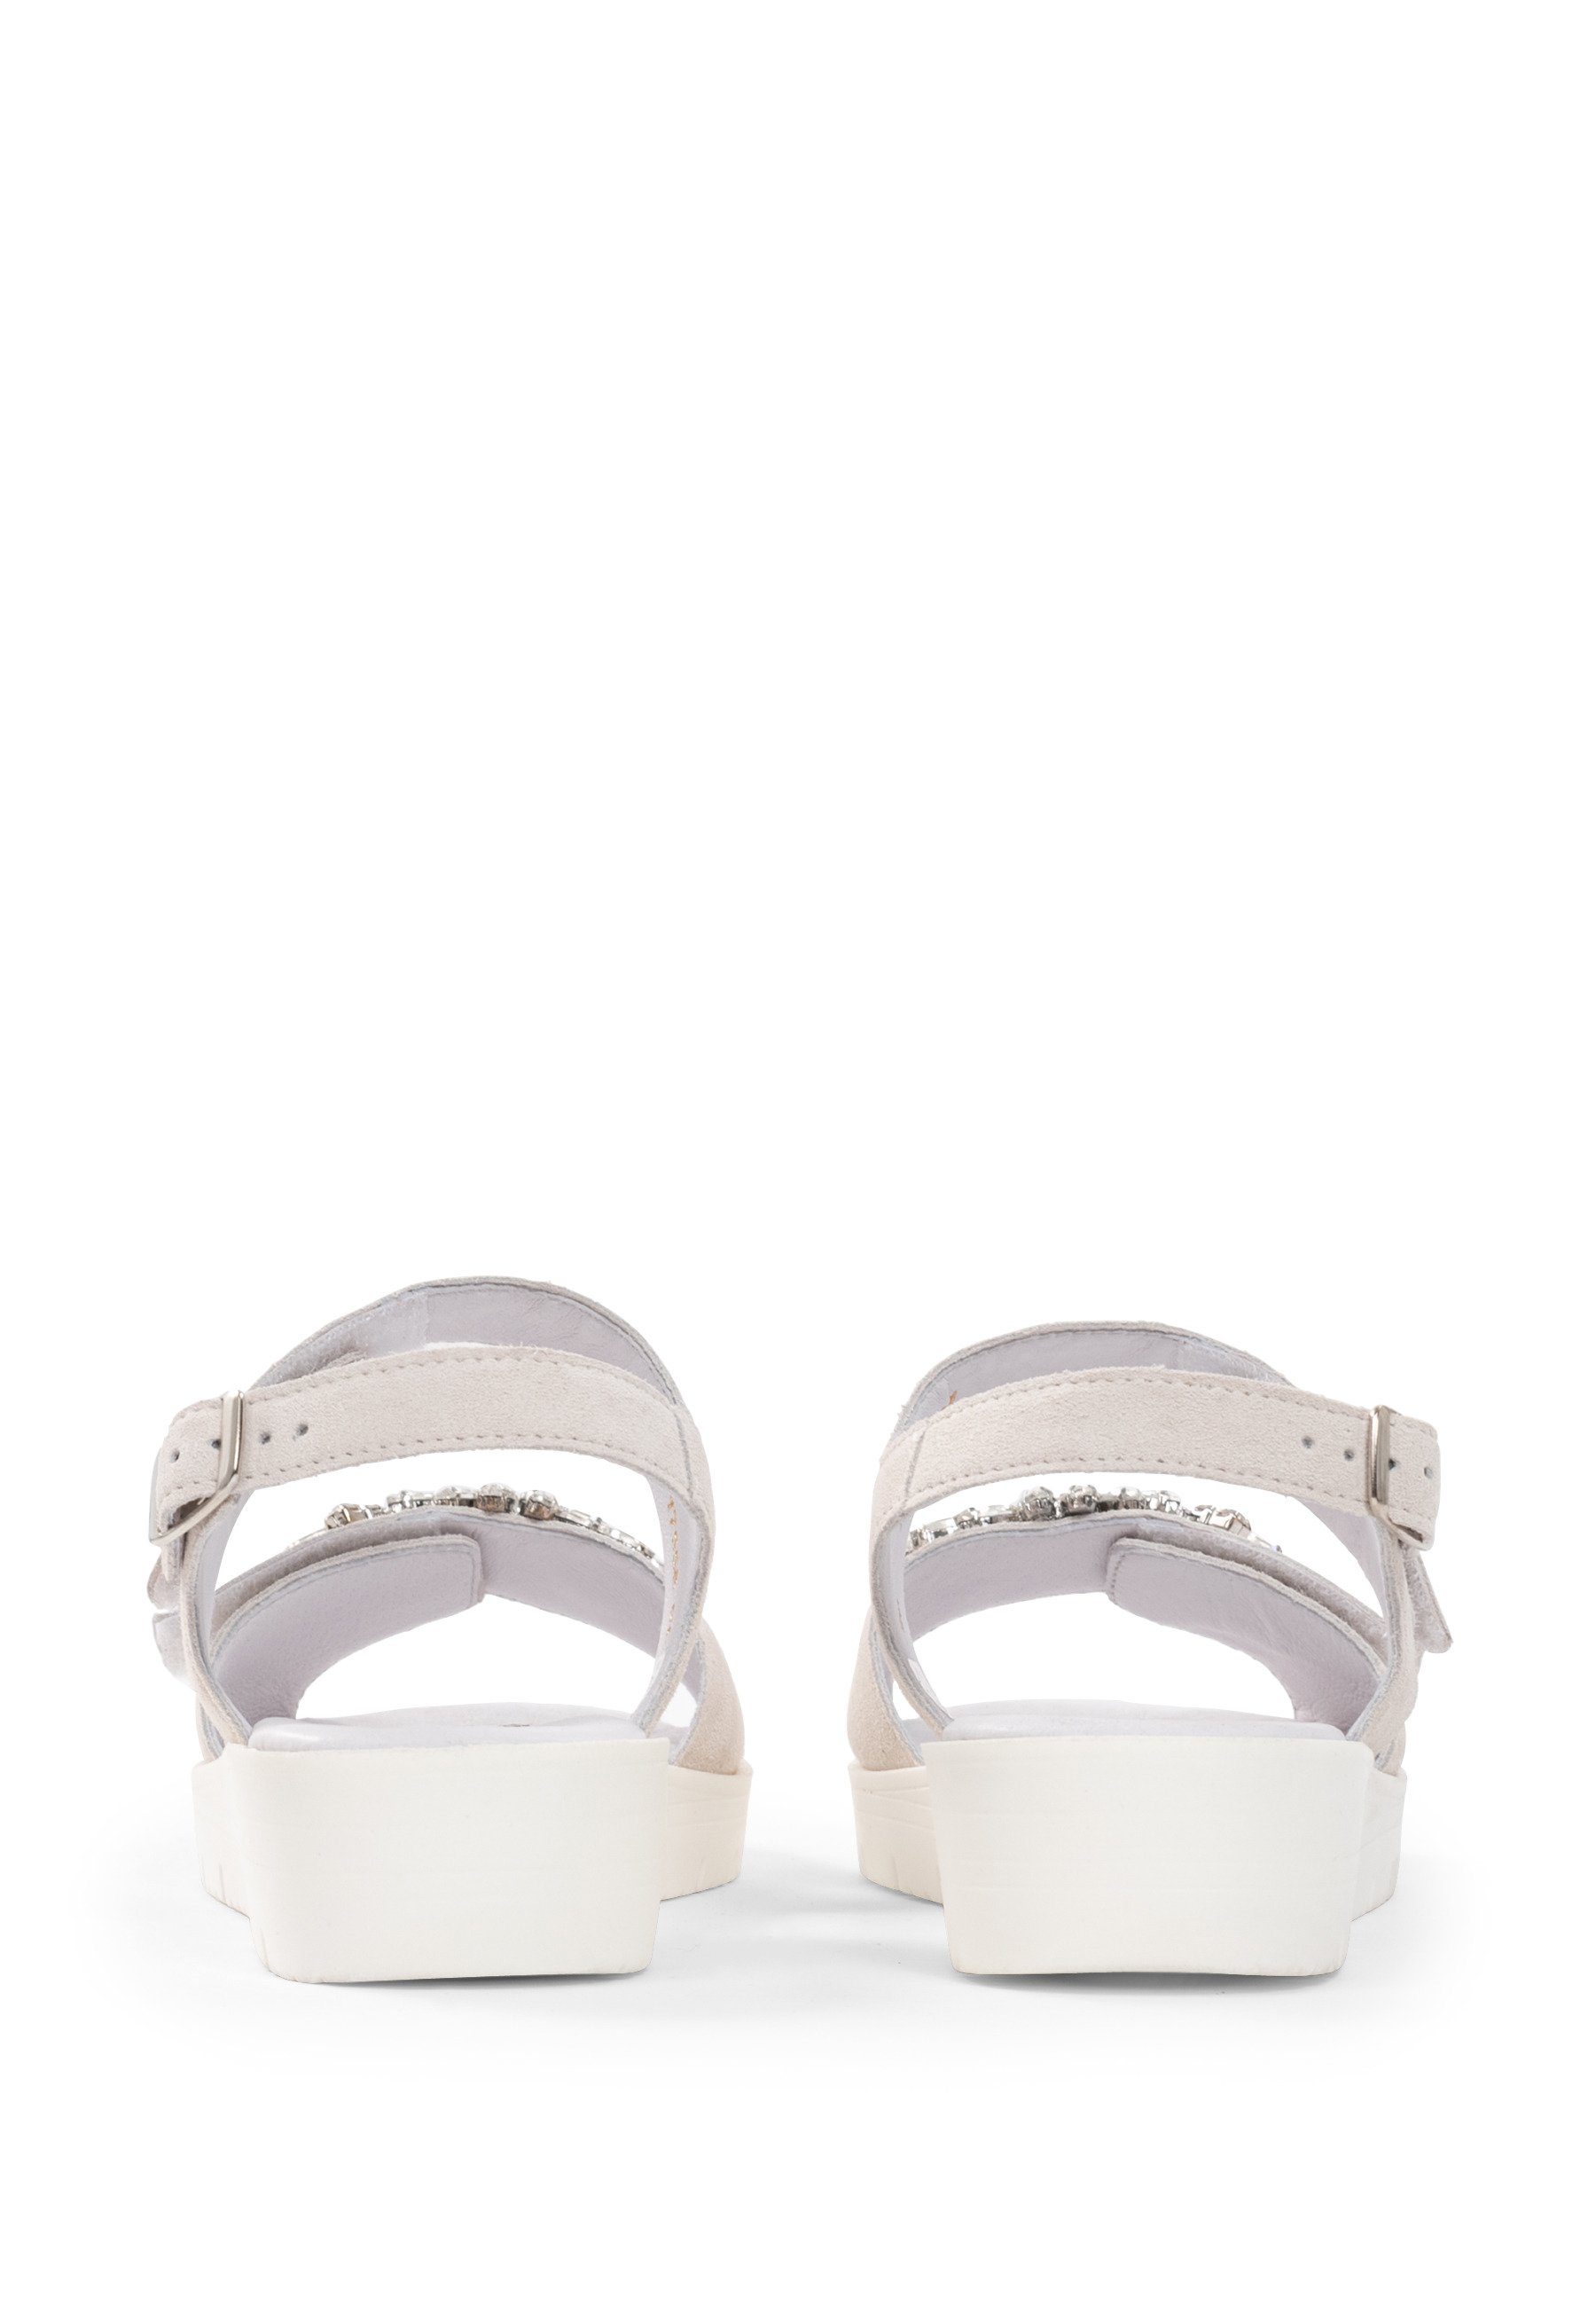 Damenschuhe Sandale weiß Sandale vitaform Veloursleder